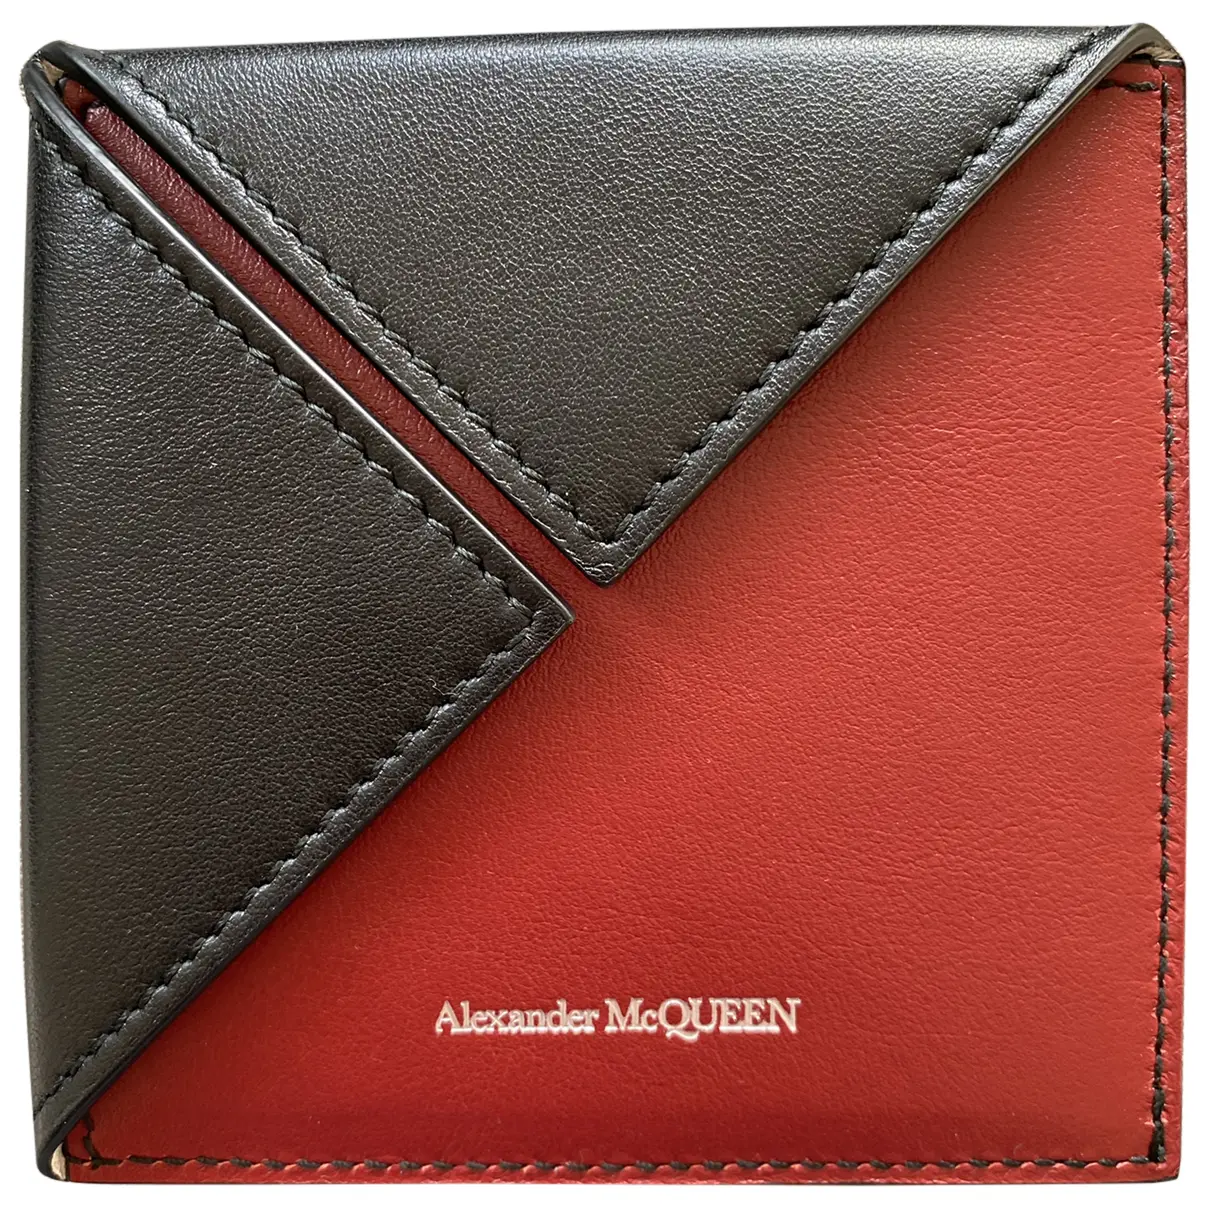 Leather purse Alexander McQueen